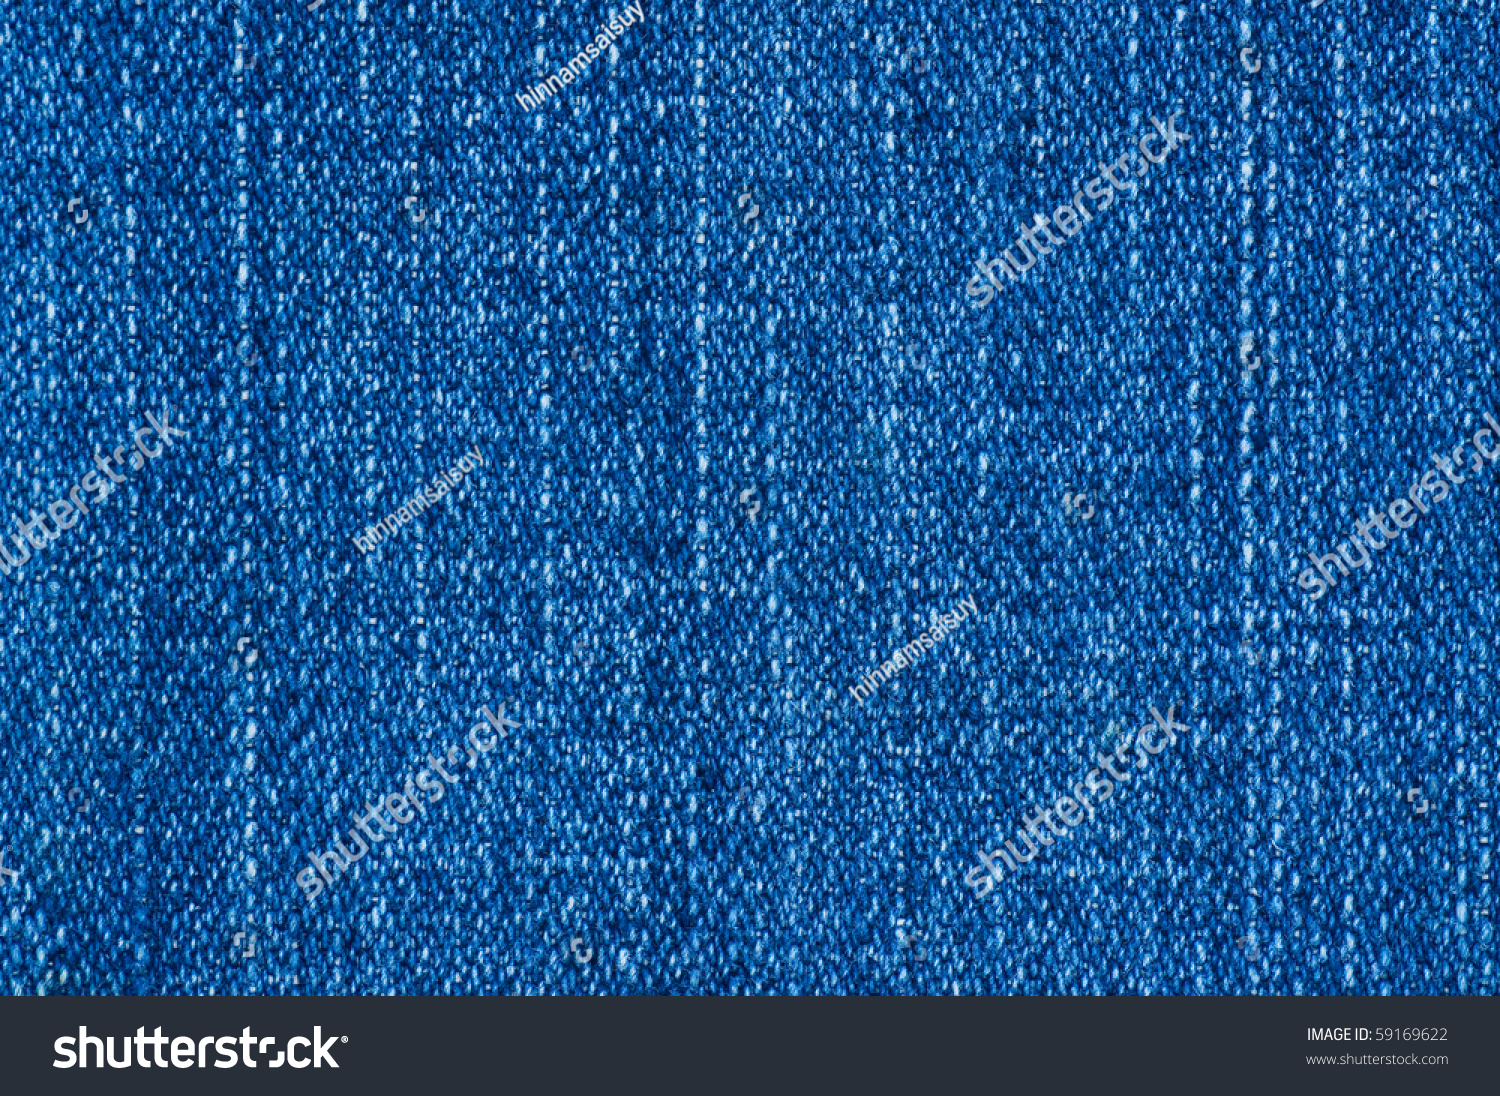 Jean Fabric Texture Stock Photo 59169622 : Shutterstock